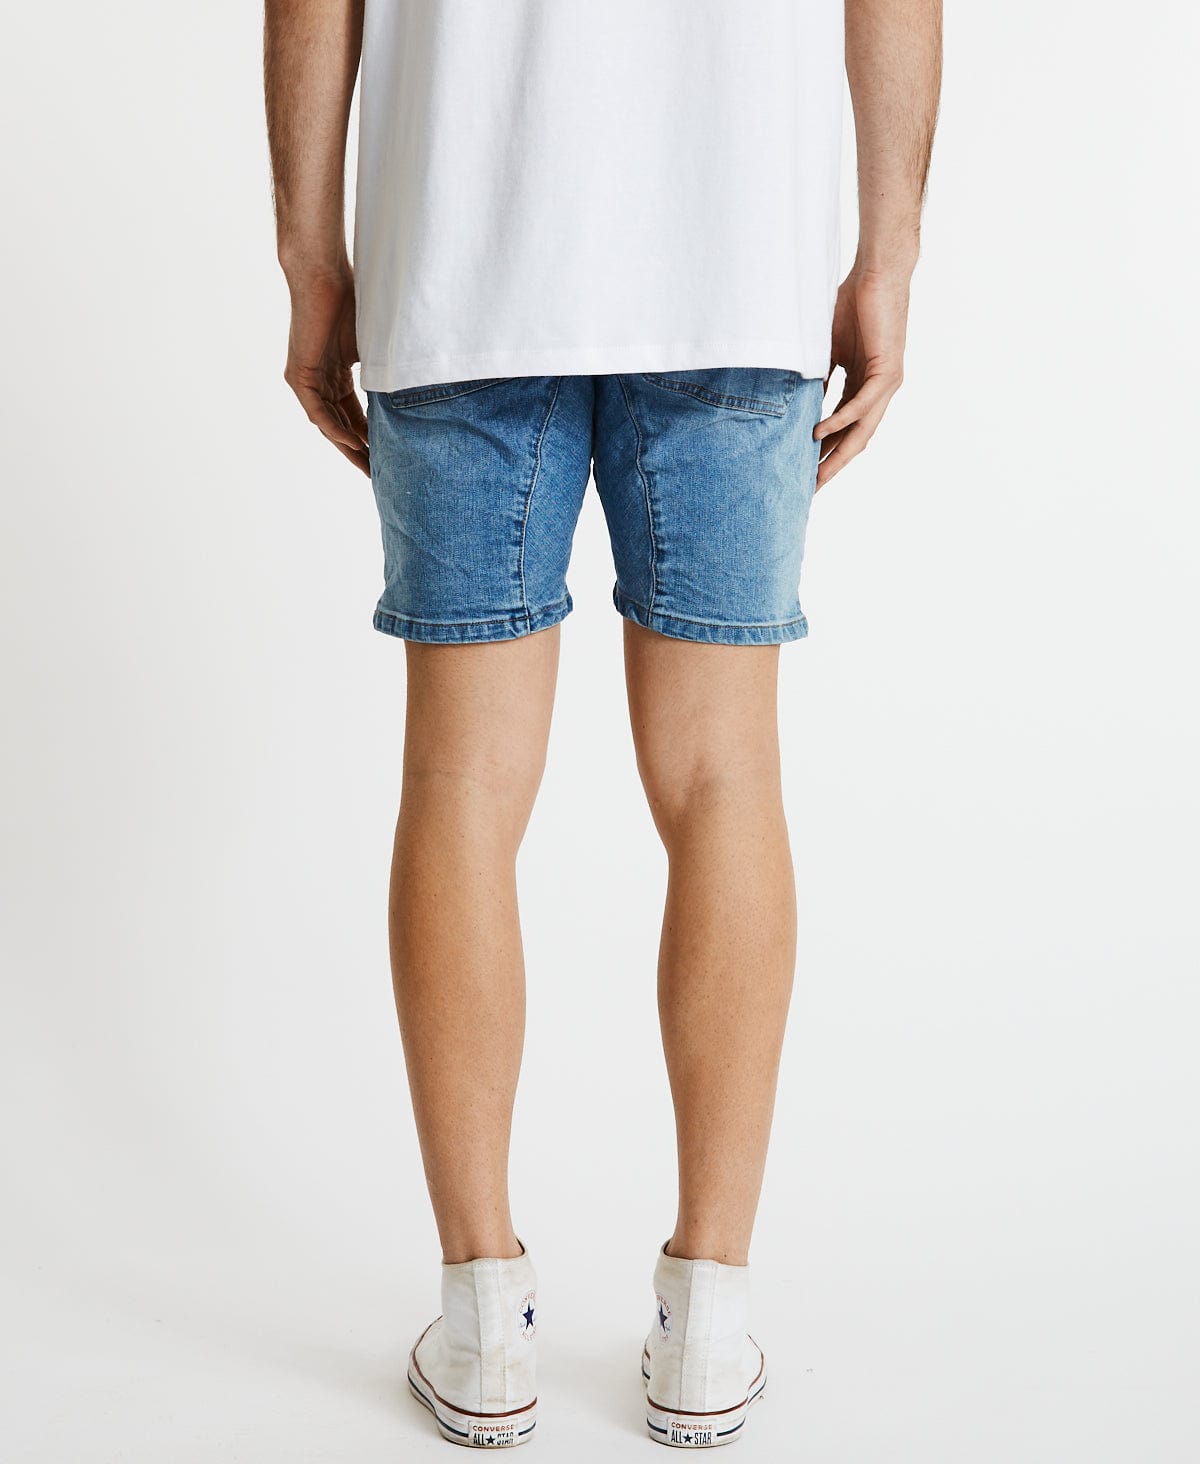 Store Shorts – Horizon Denim Blue Neverland Carter